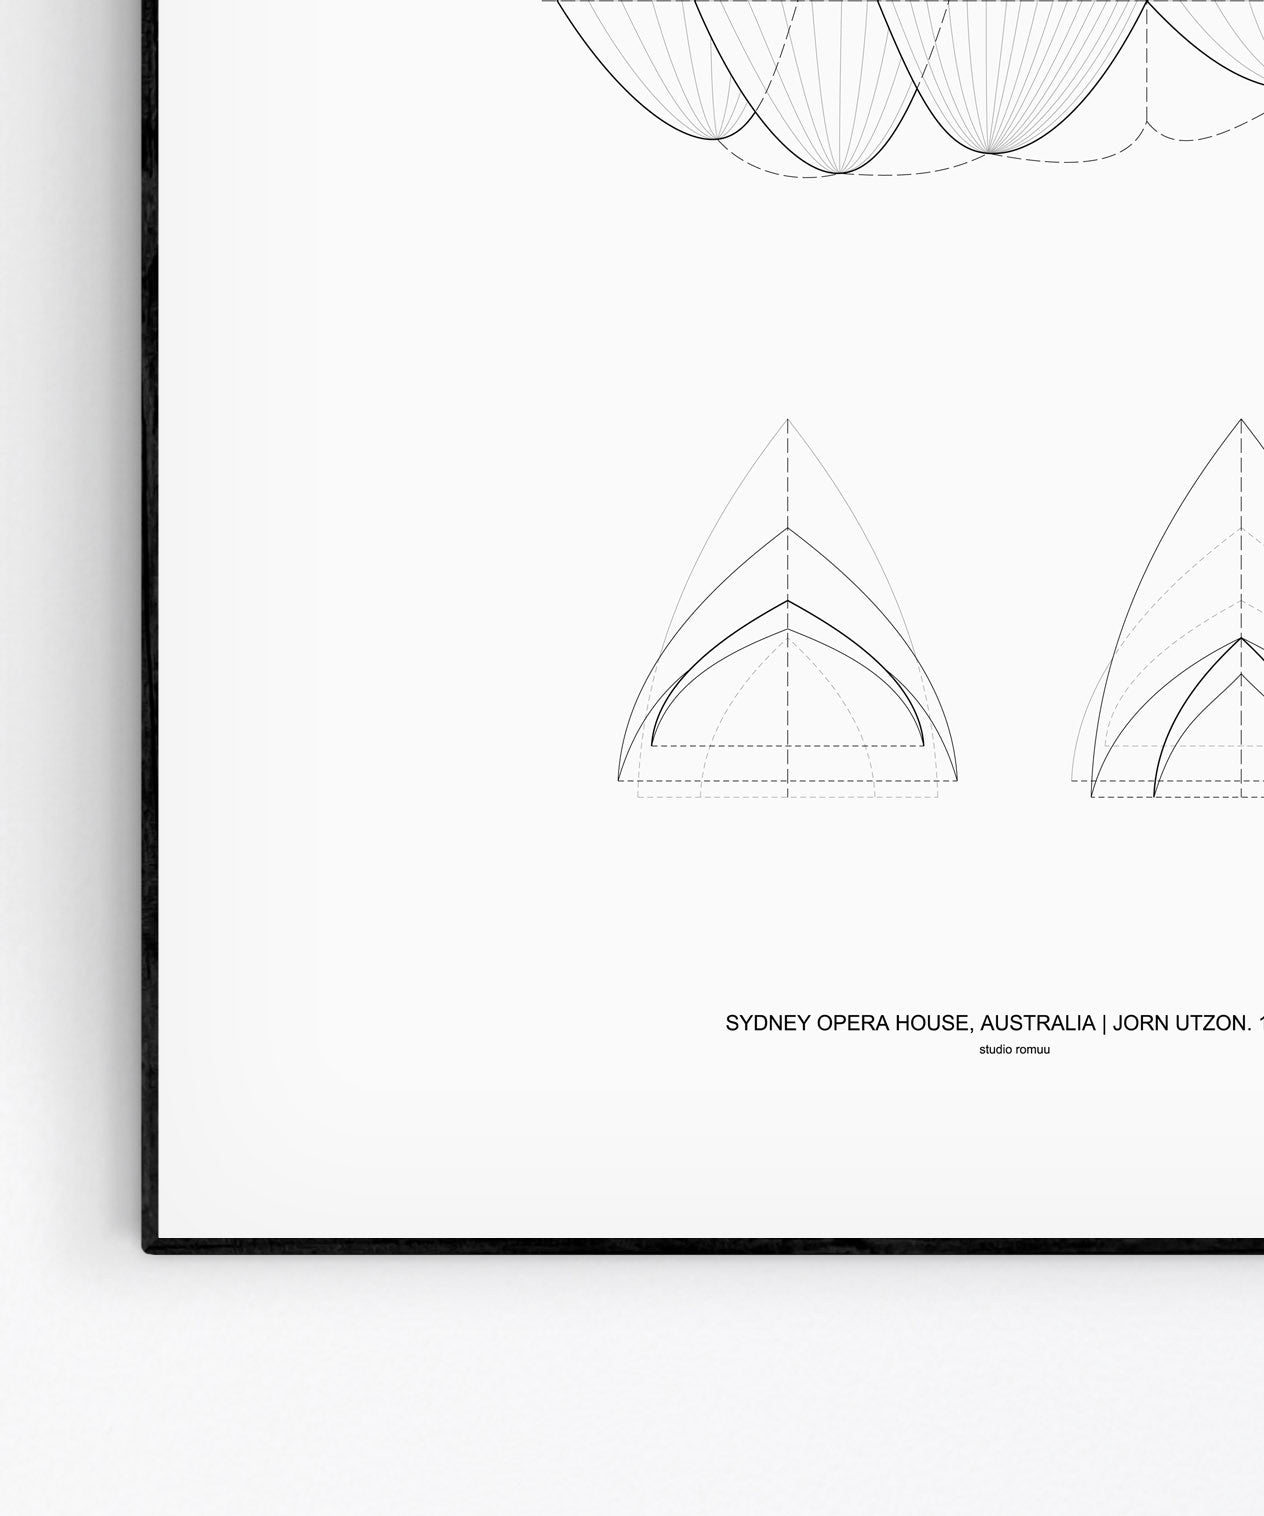 Sydney Opera House Architecture Print by Studio Romuu - detail